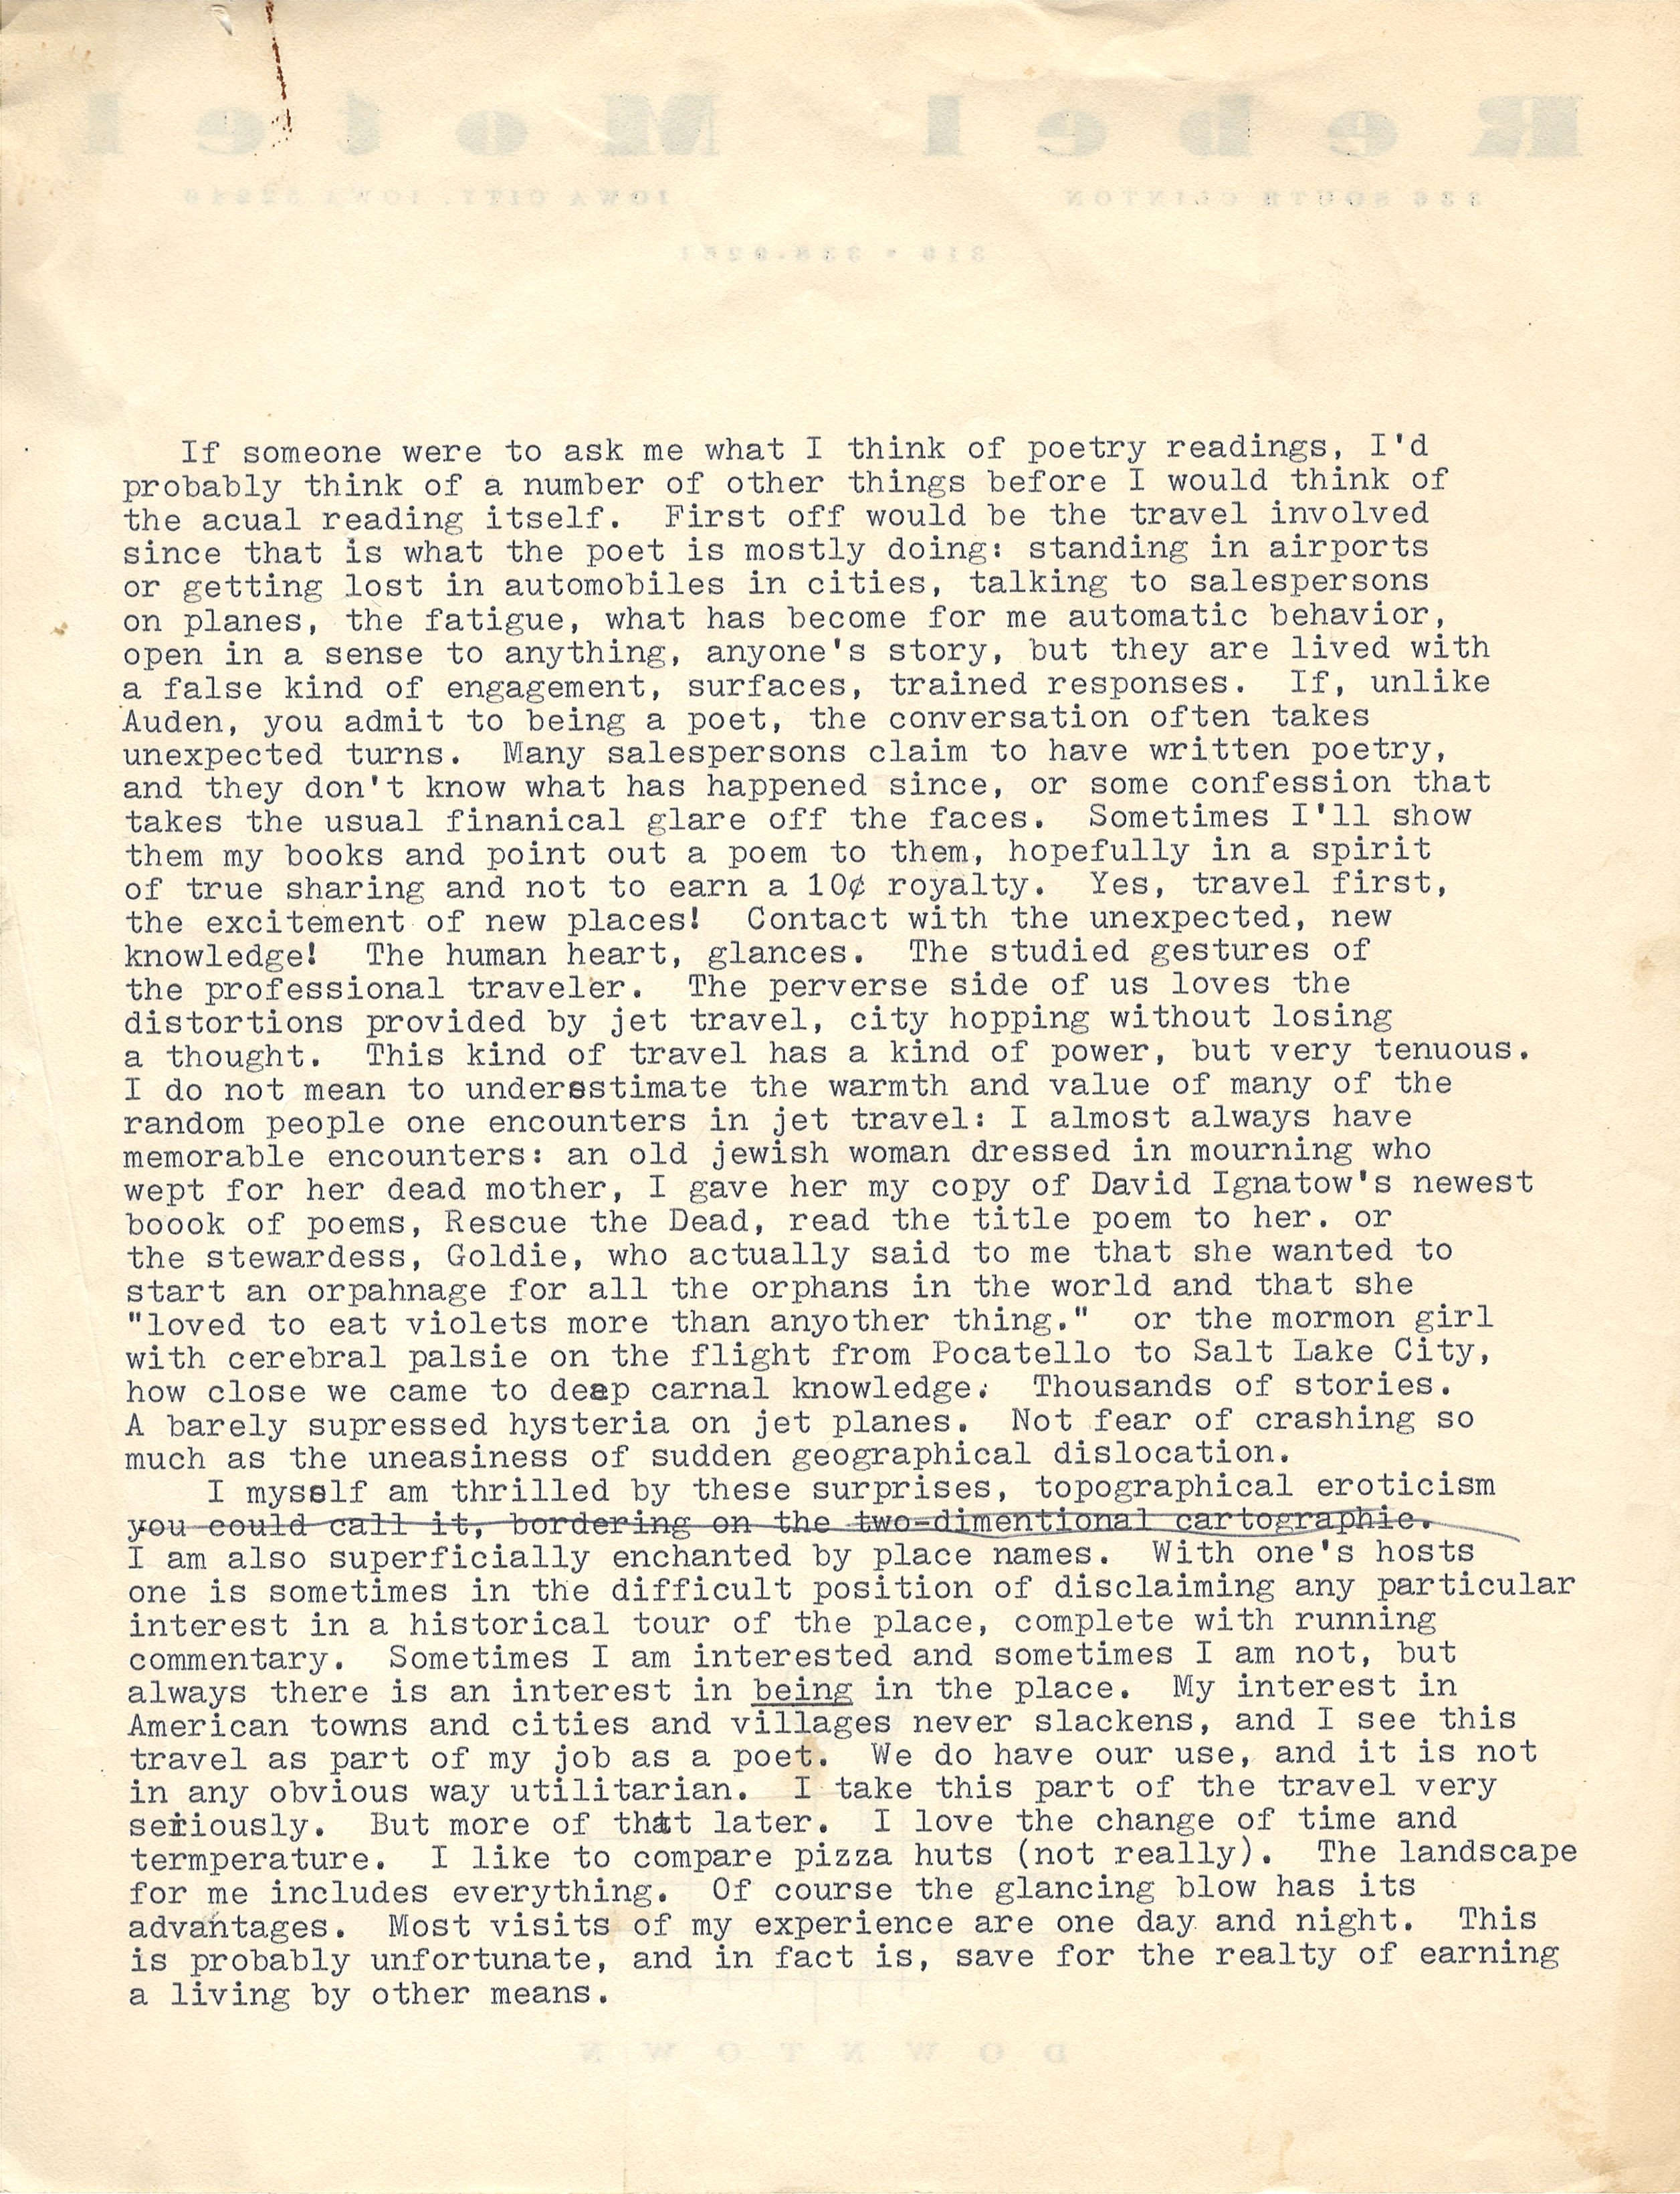 Typewritten essay by James Tate